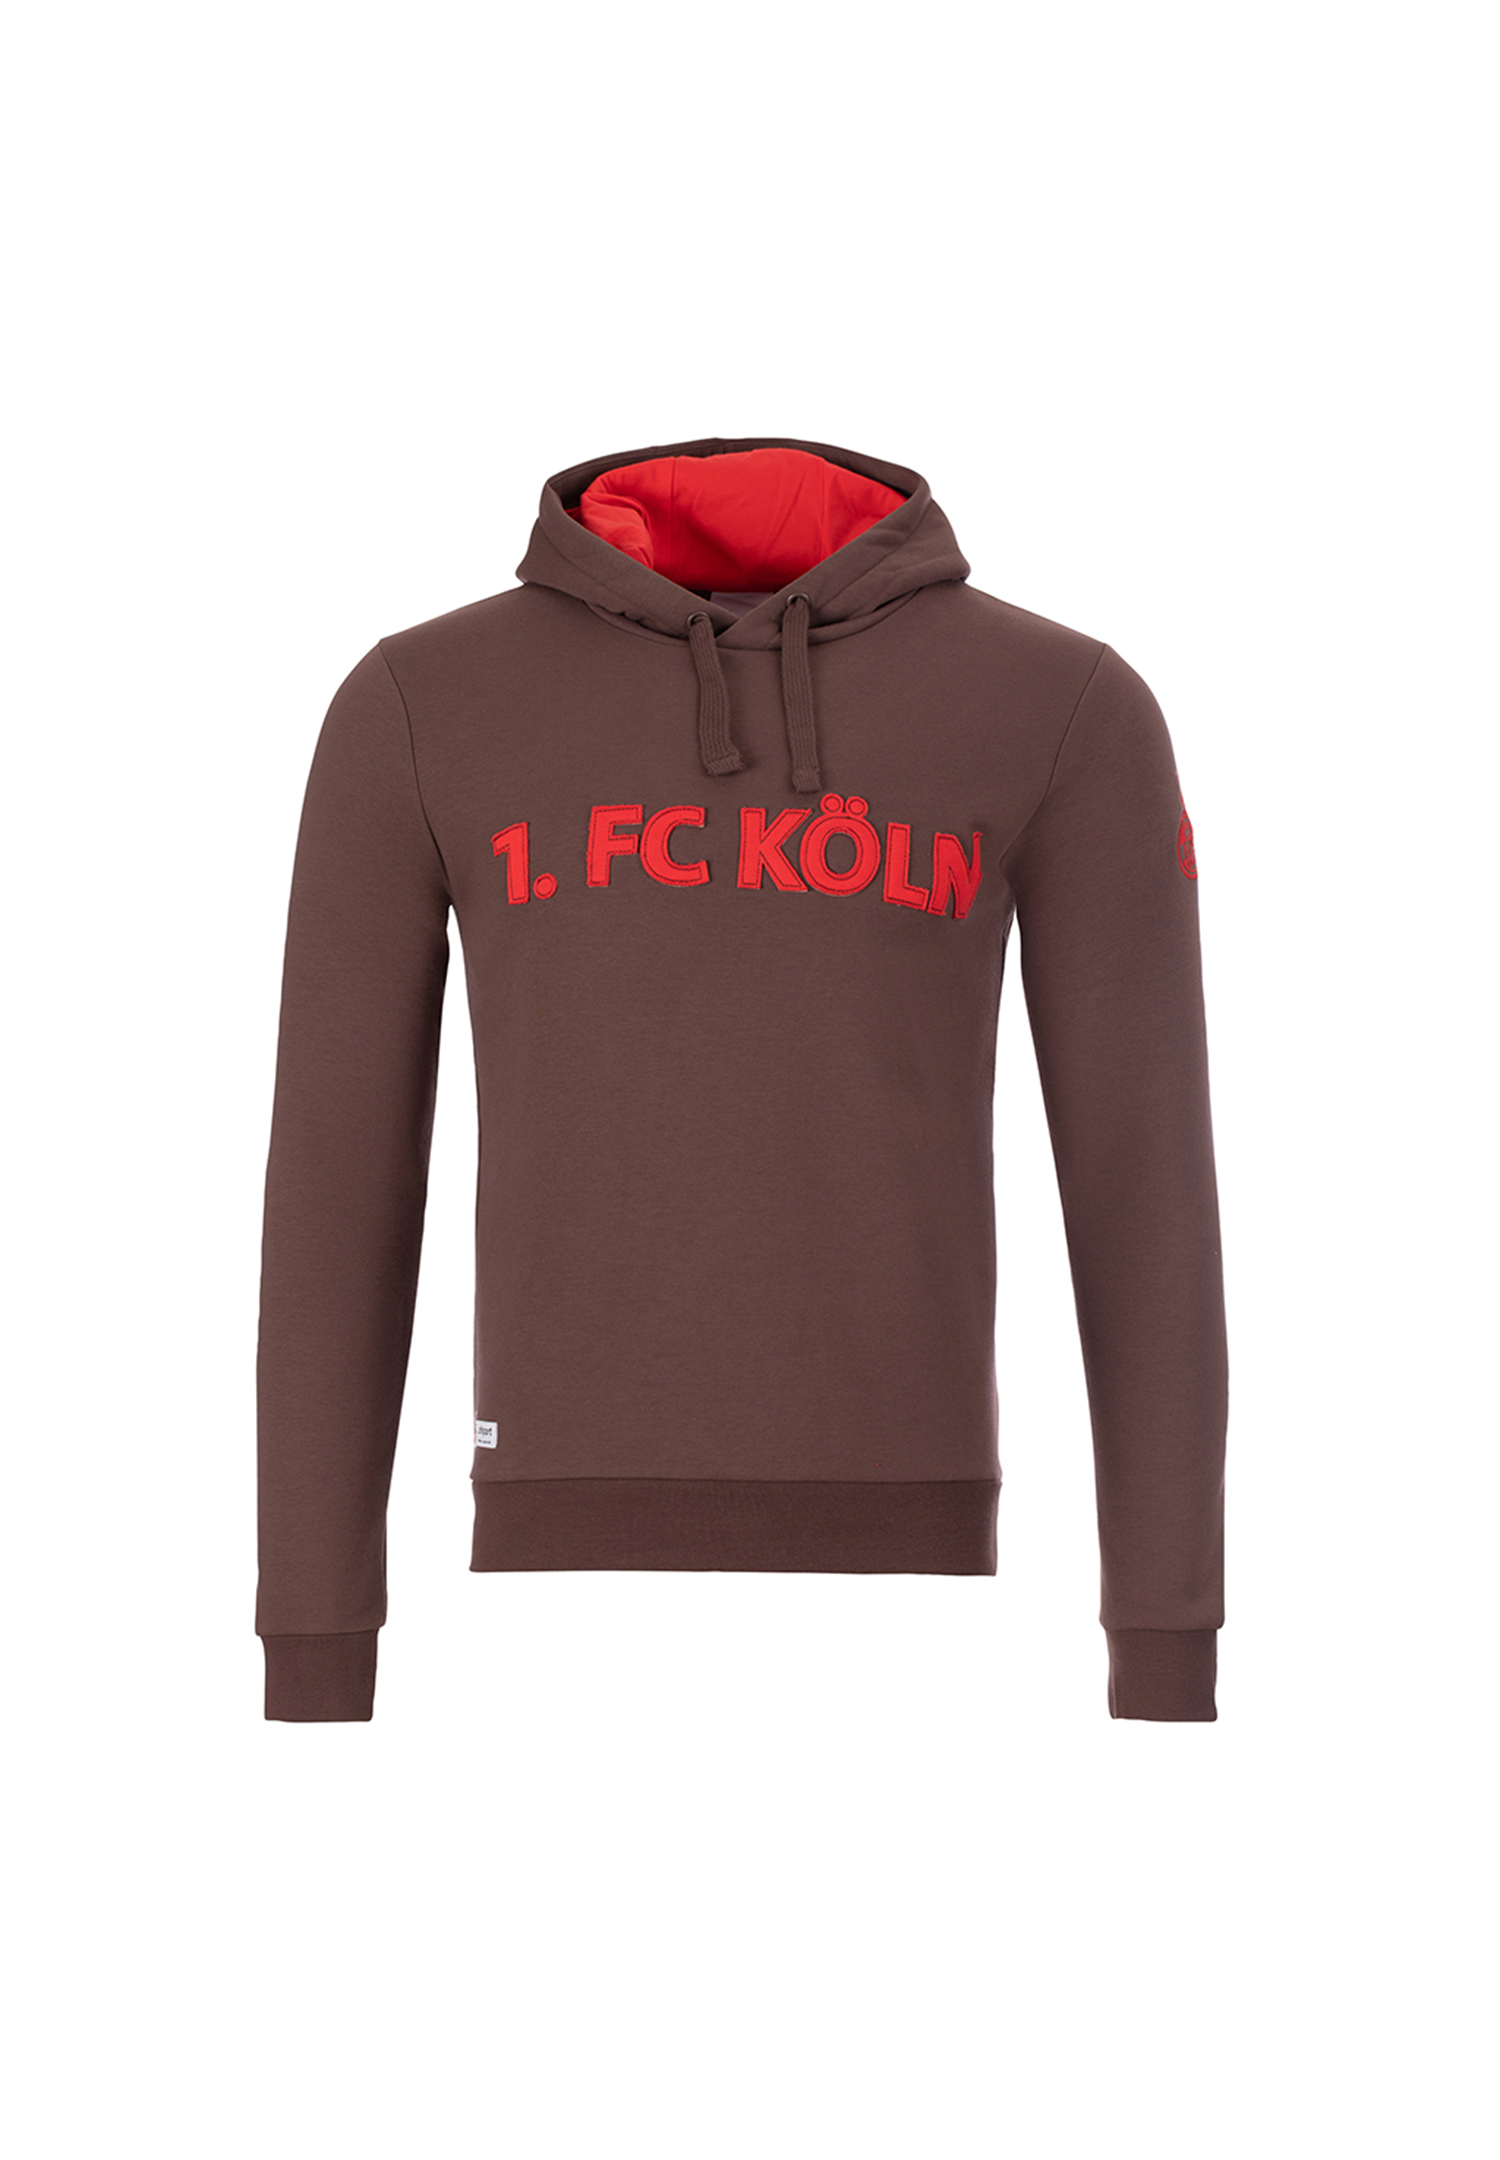 Uhlsport 1.FC Köln Hoody Pro Herren braun